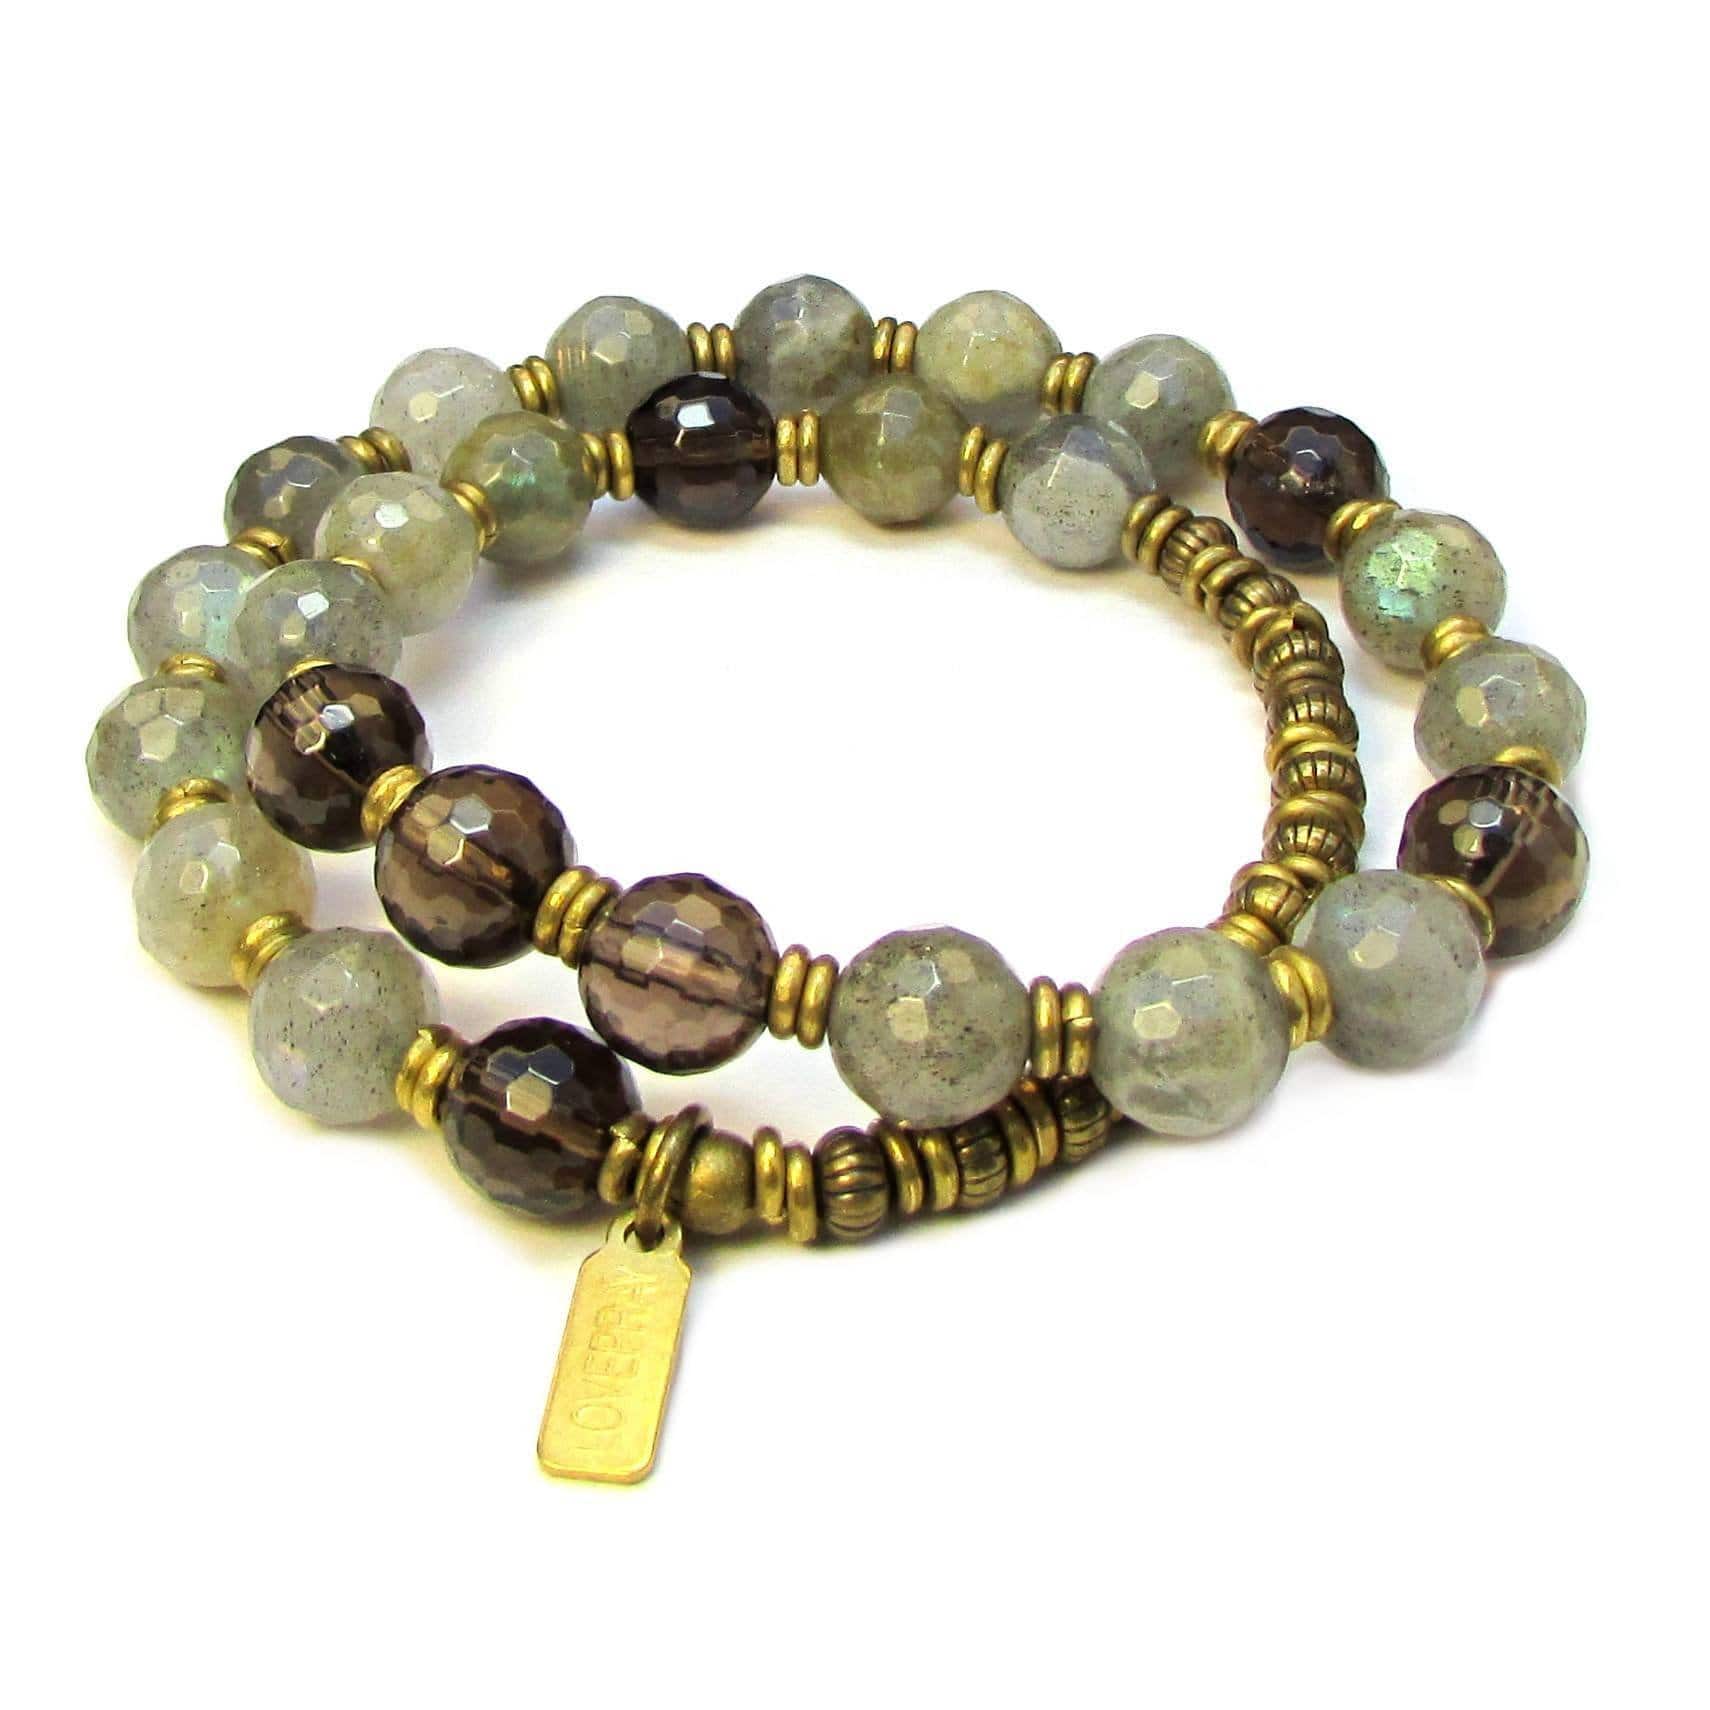 Bracelets - Positivity And Serendipity, Genuine Labradorite And Smoky Quartz 27 Bead Wrap Mala Bracelet